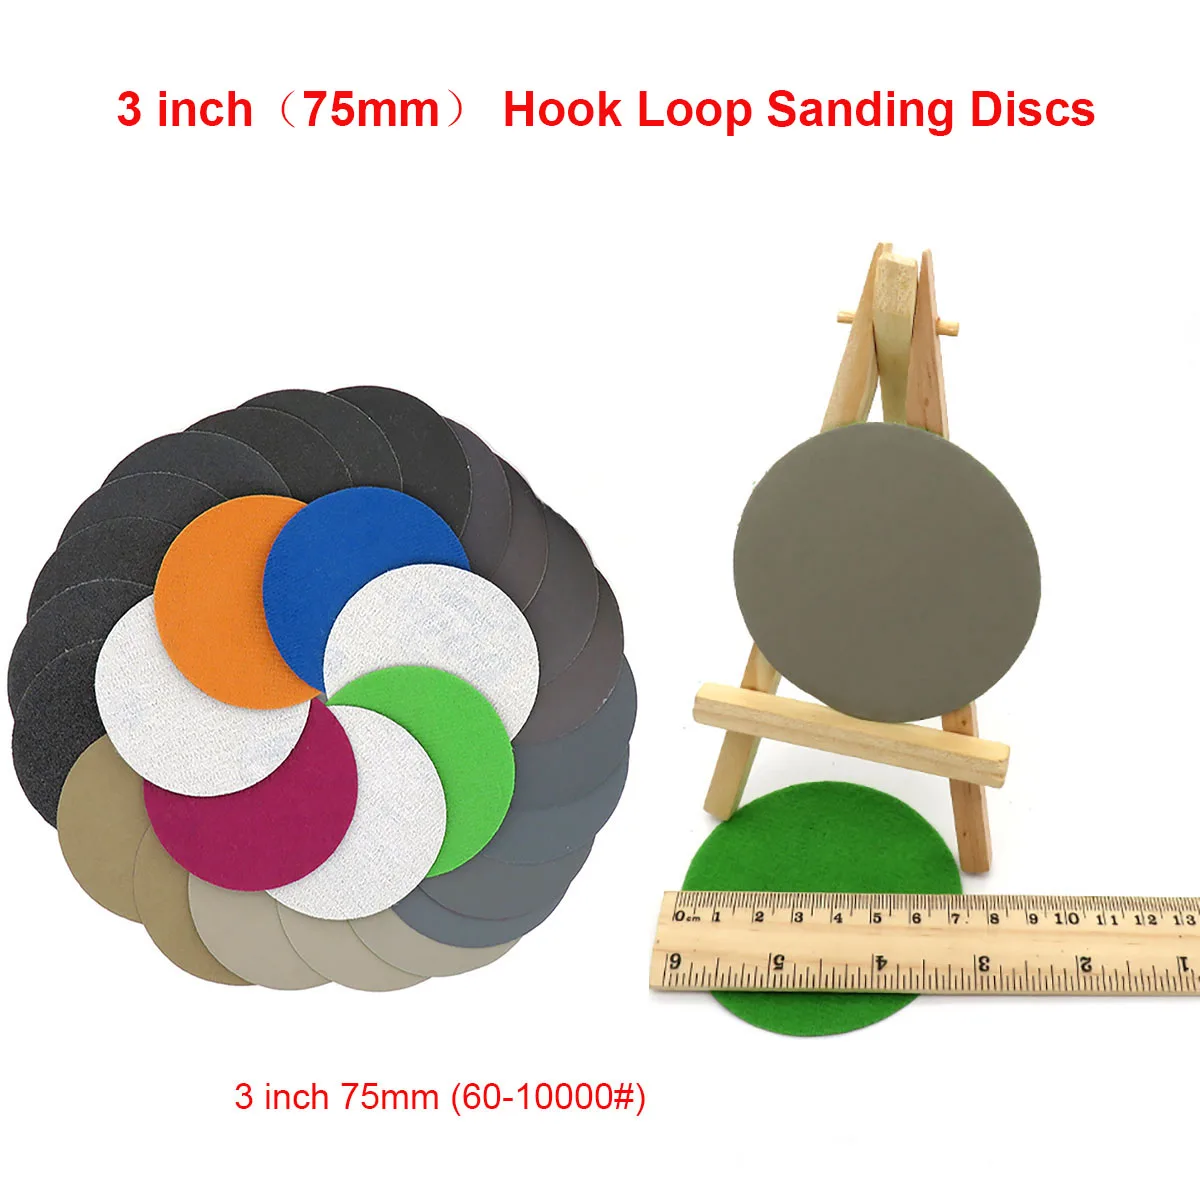 

30pcs 75mm Hook Loop Sanding Discs 3 Inch Waterproof Round Sandpaper Silicon Carbide Abrasive 60 to 10000 Grit Wet / Dry